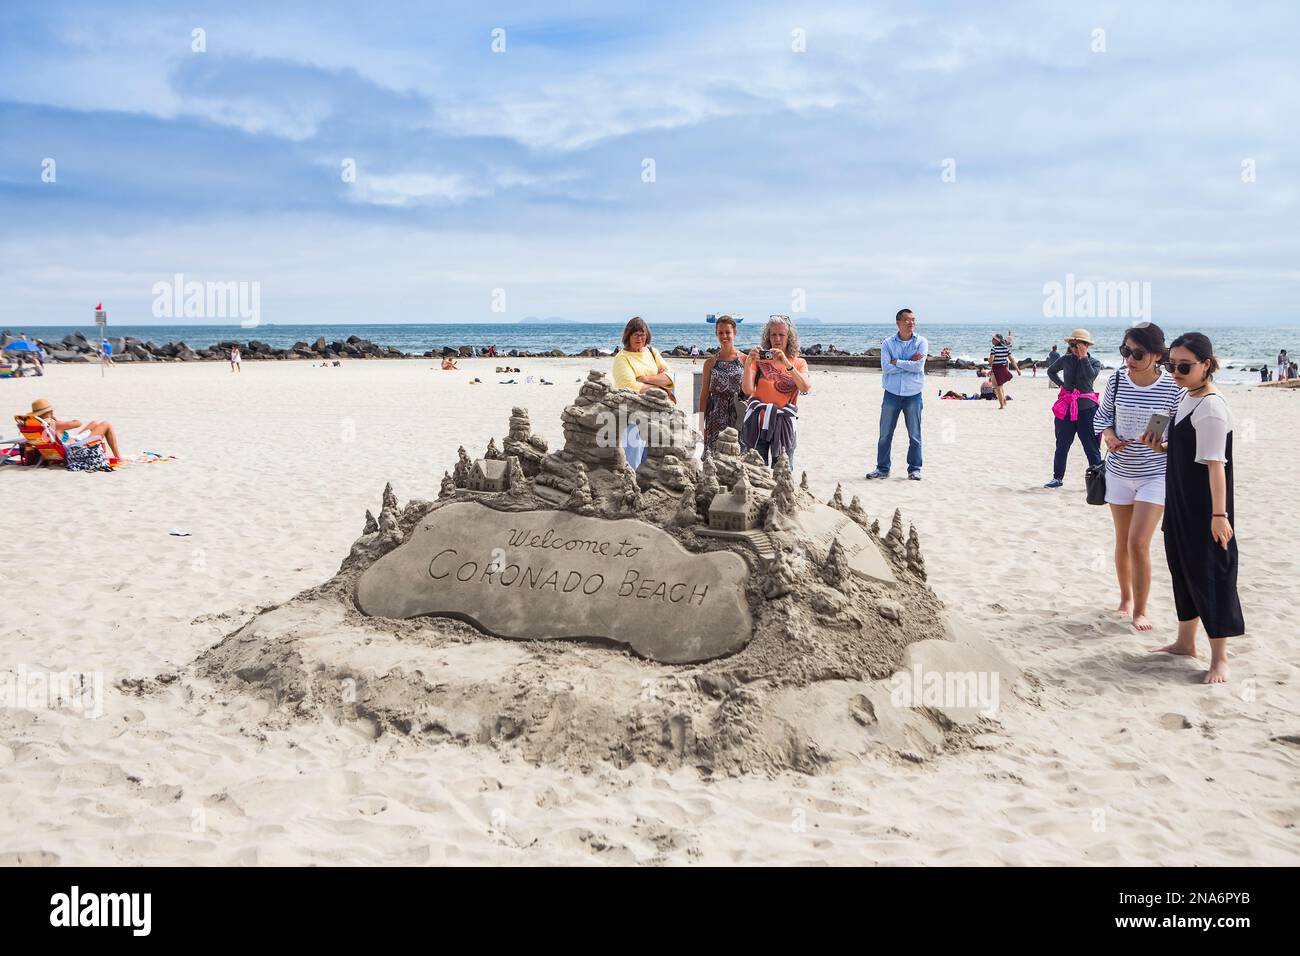 Tourists viewing a sandcastle on Coronado Beach; Coronado, California, United States of America Stock Photo